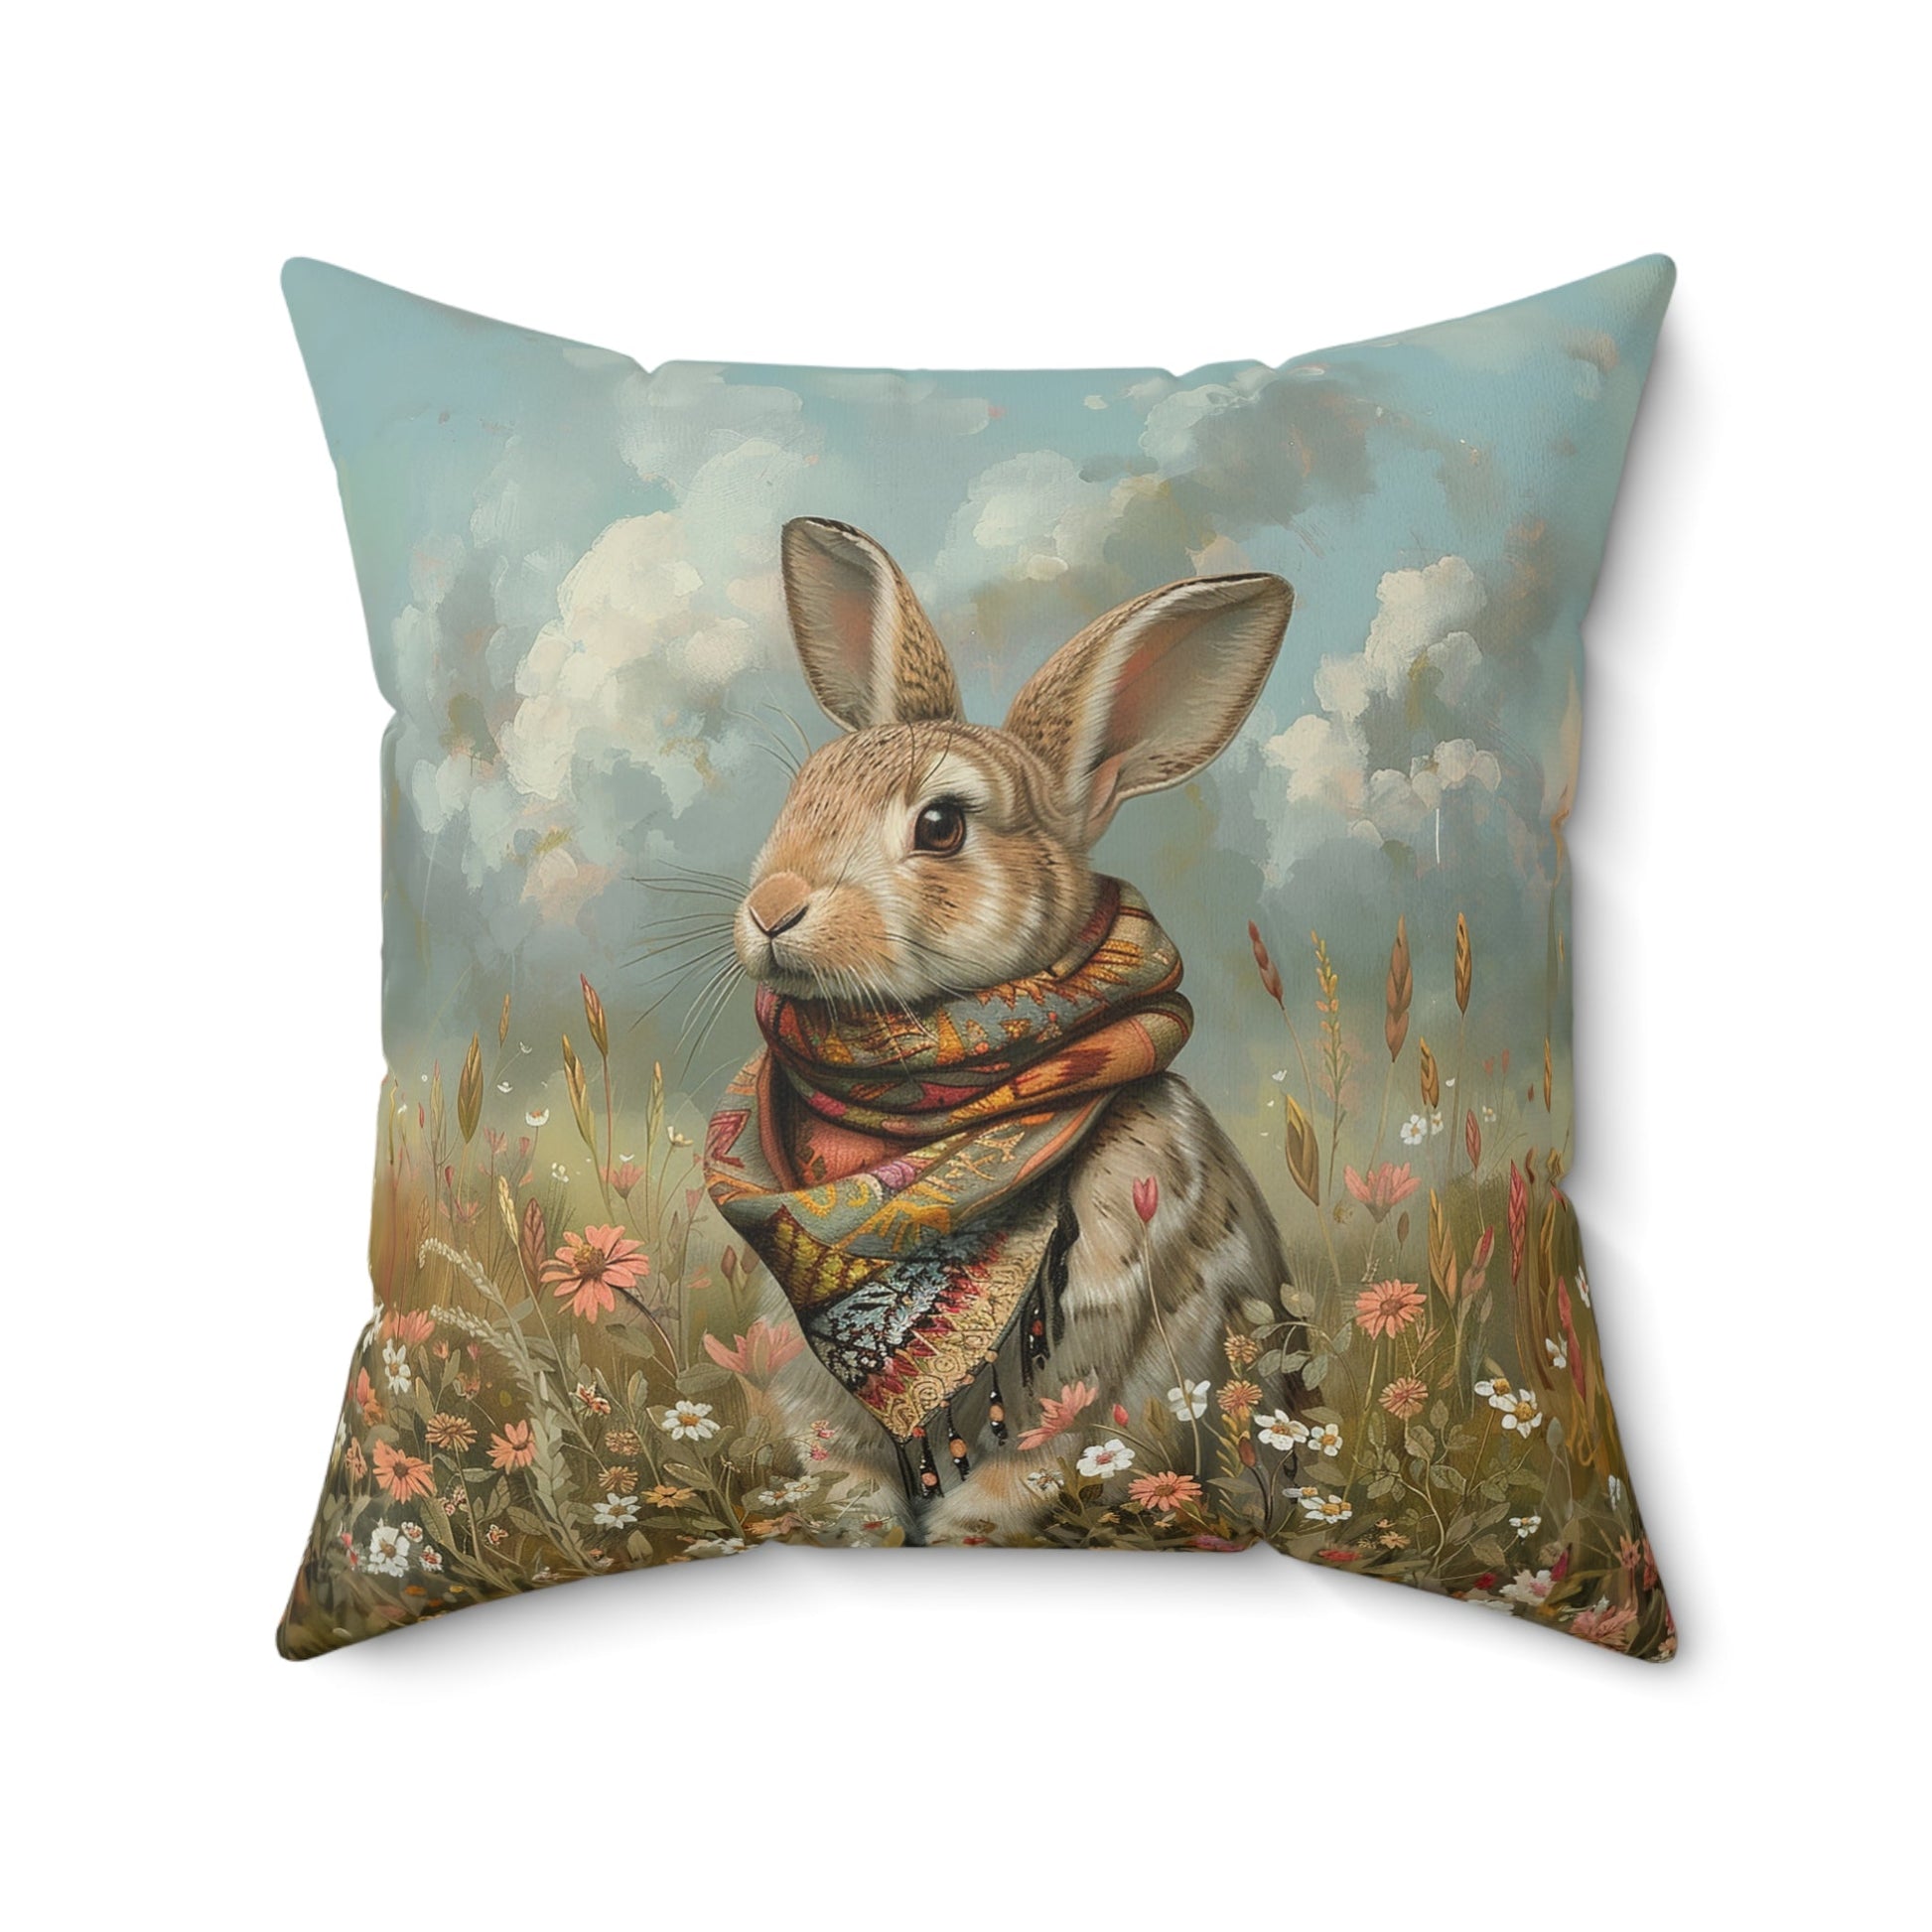 Cute Vintage Storybook Rabbit Pillow with Colorful Scarf in Wildflowers - FlooredByArt